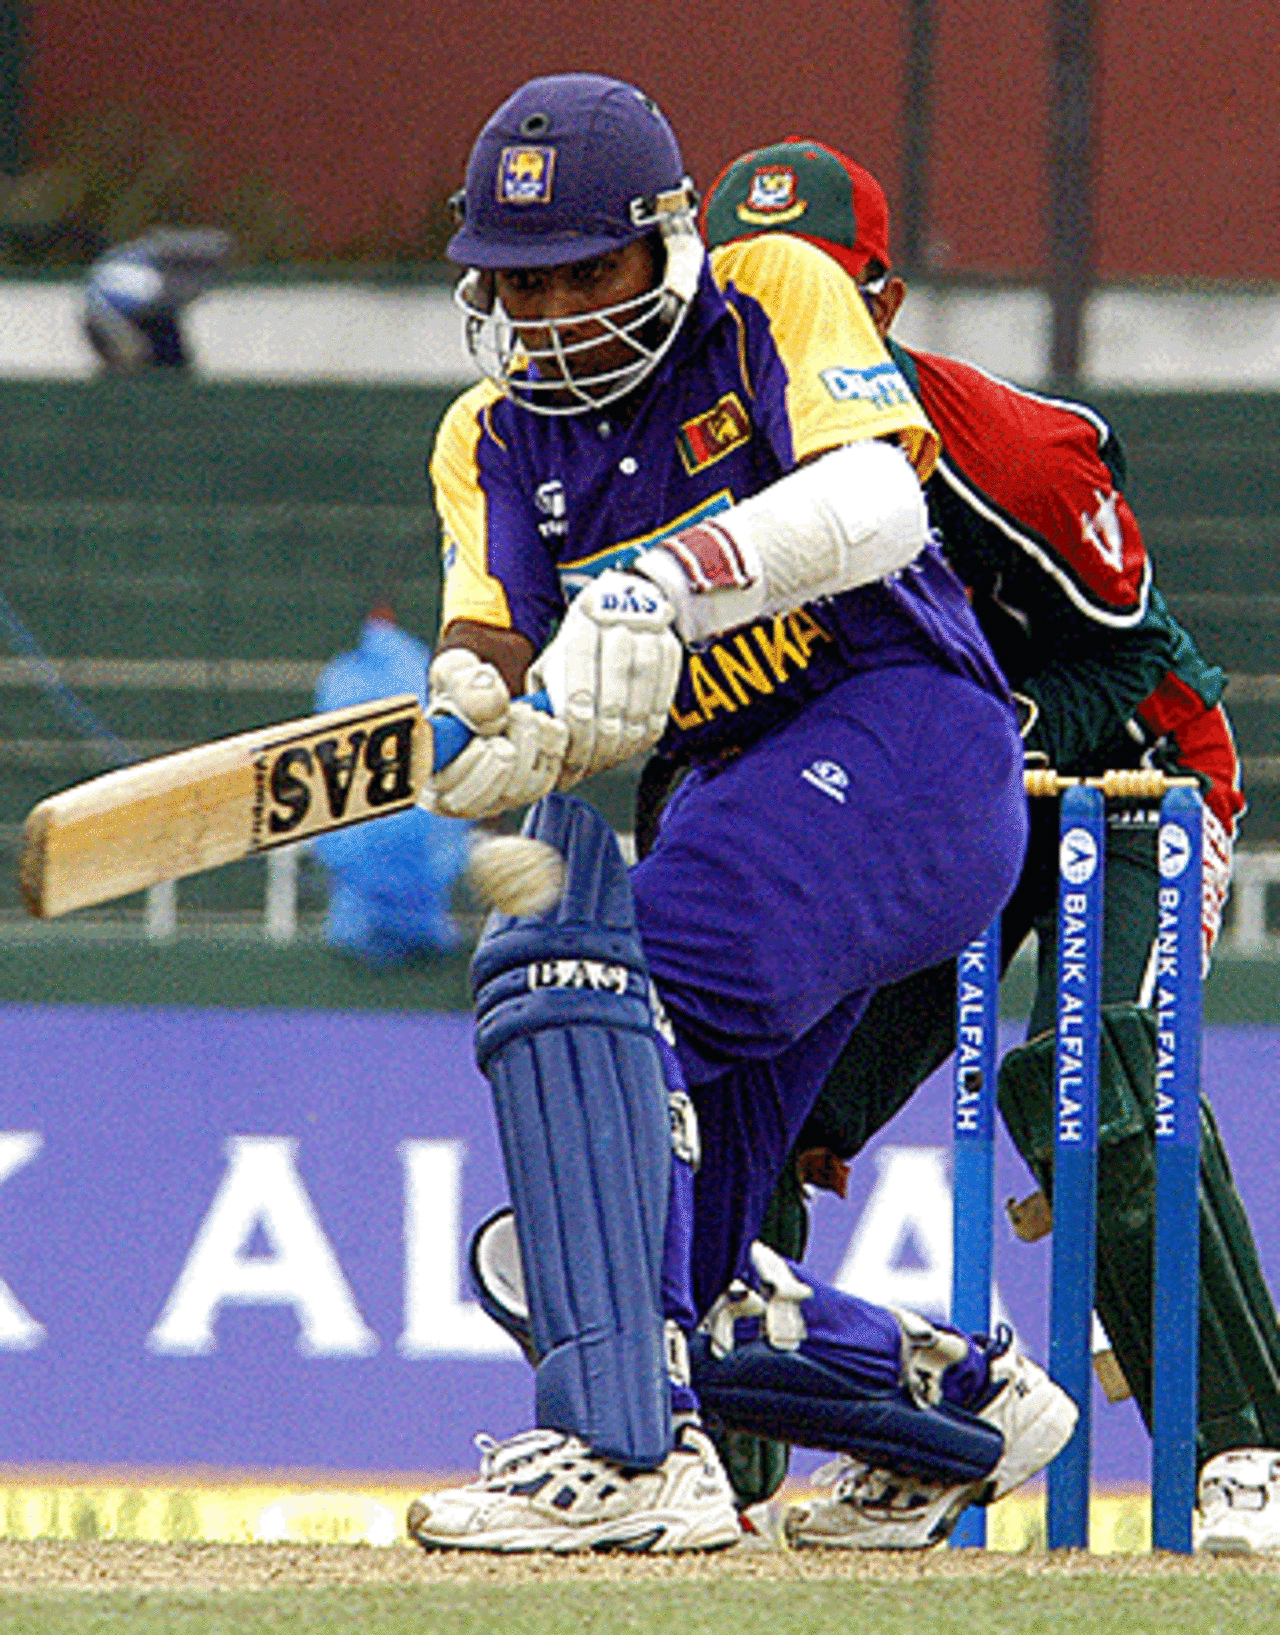 Mahela Jayawardene paddles it past short fine leg during his quick 50 off 35 balls, Sri Lanka v Bangladesh, Sinhalese Sports Club Ground, Colombo, August 31, 2005